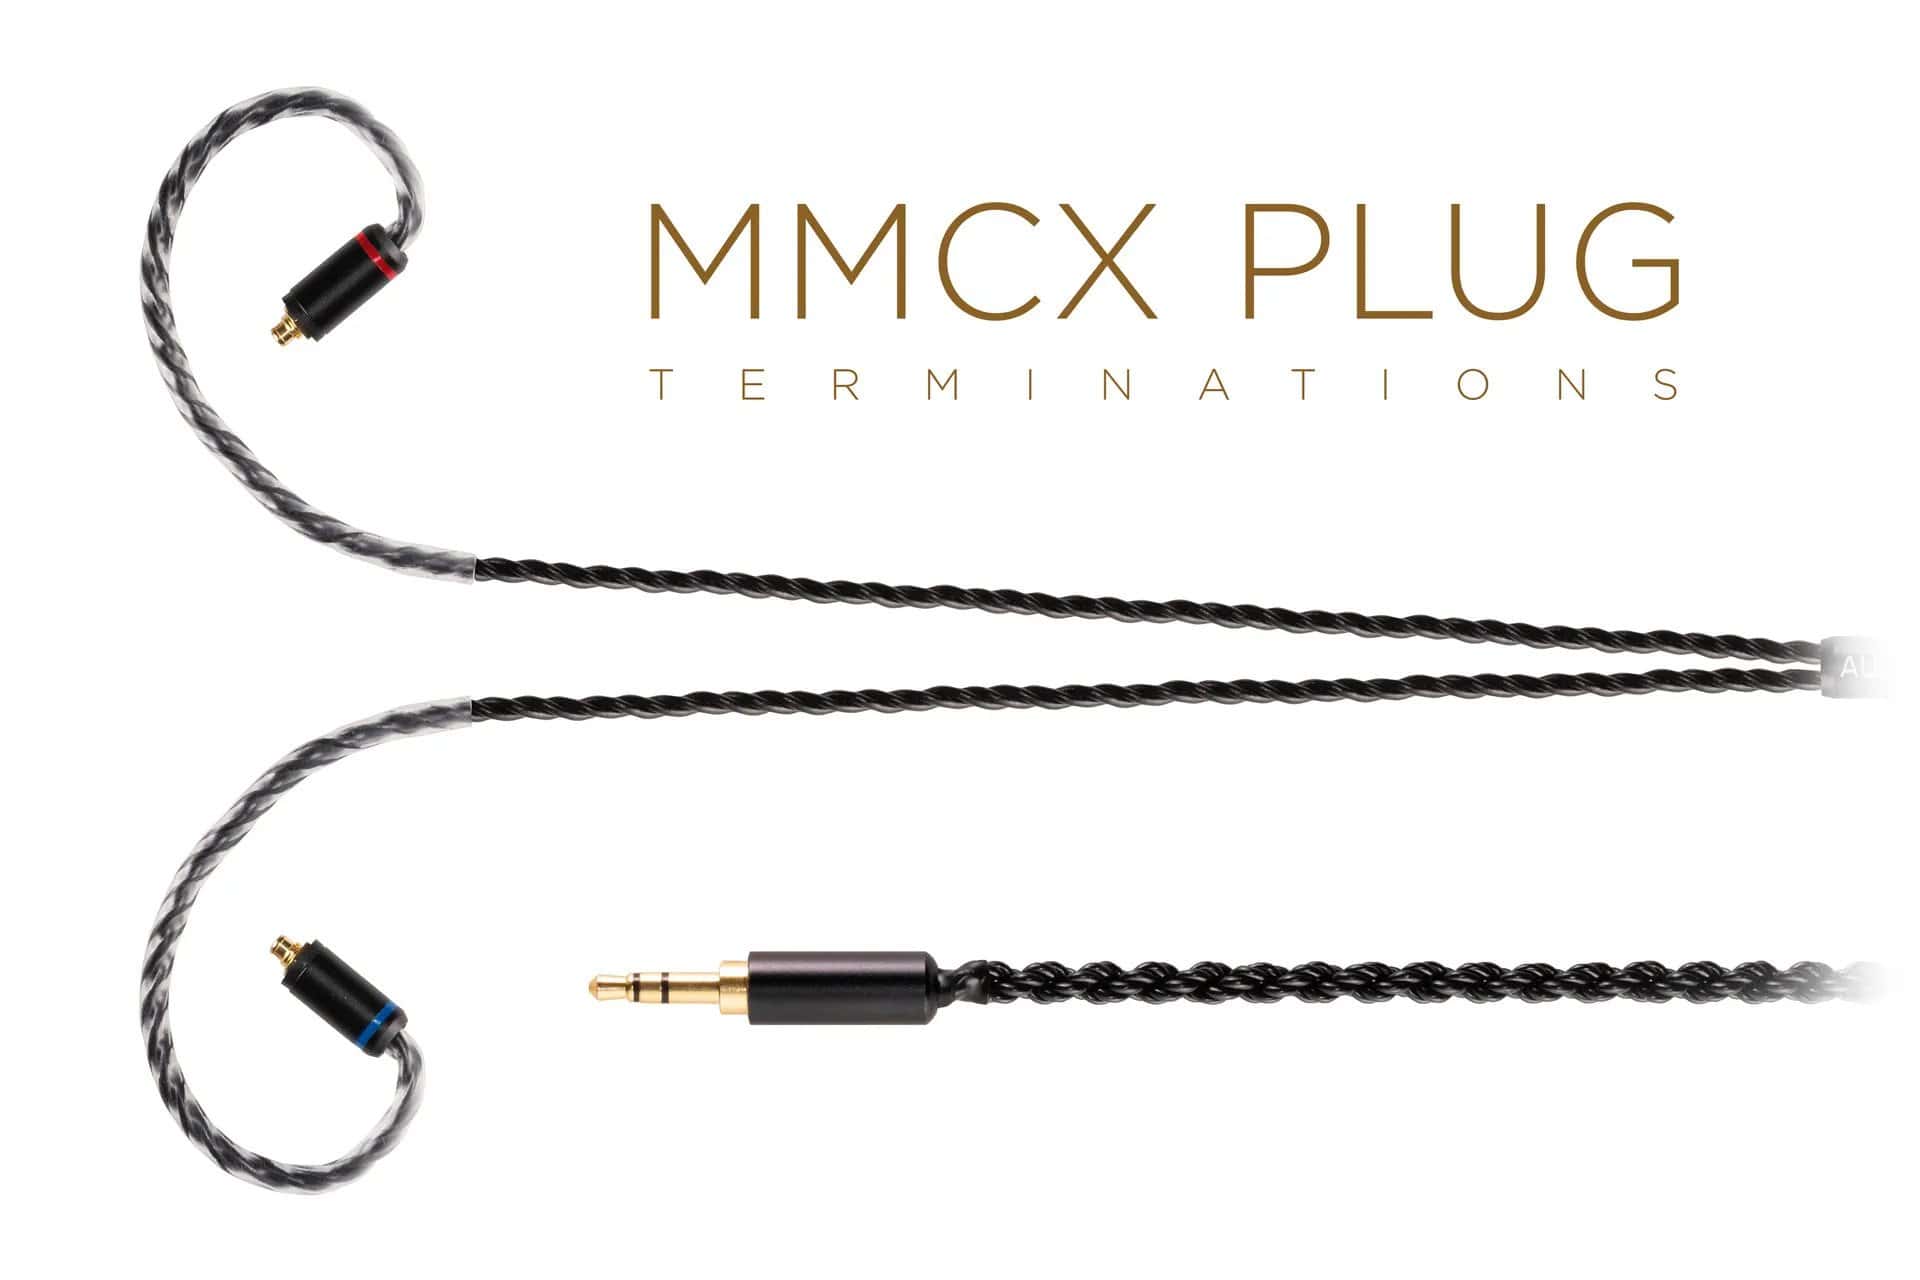 Connectivity: MMCX plug